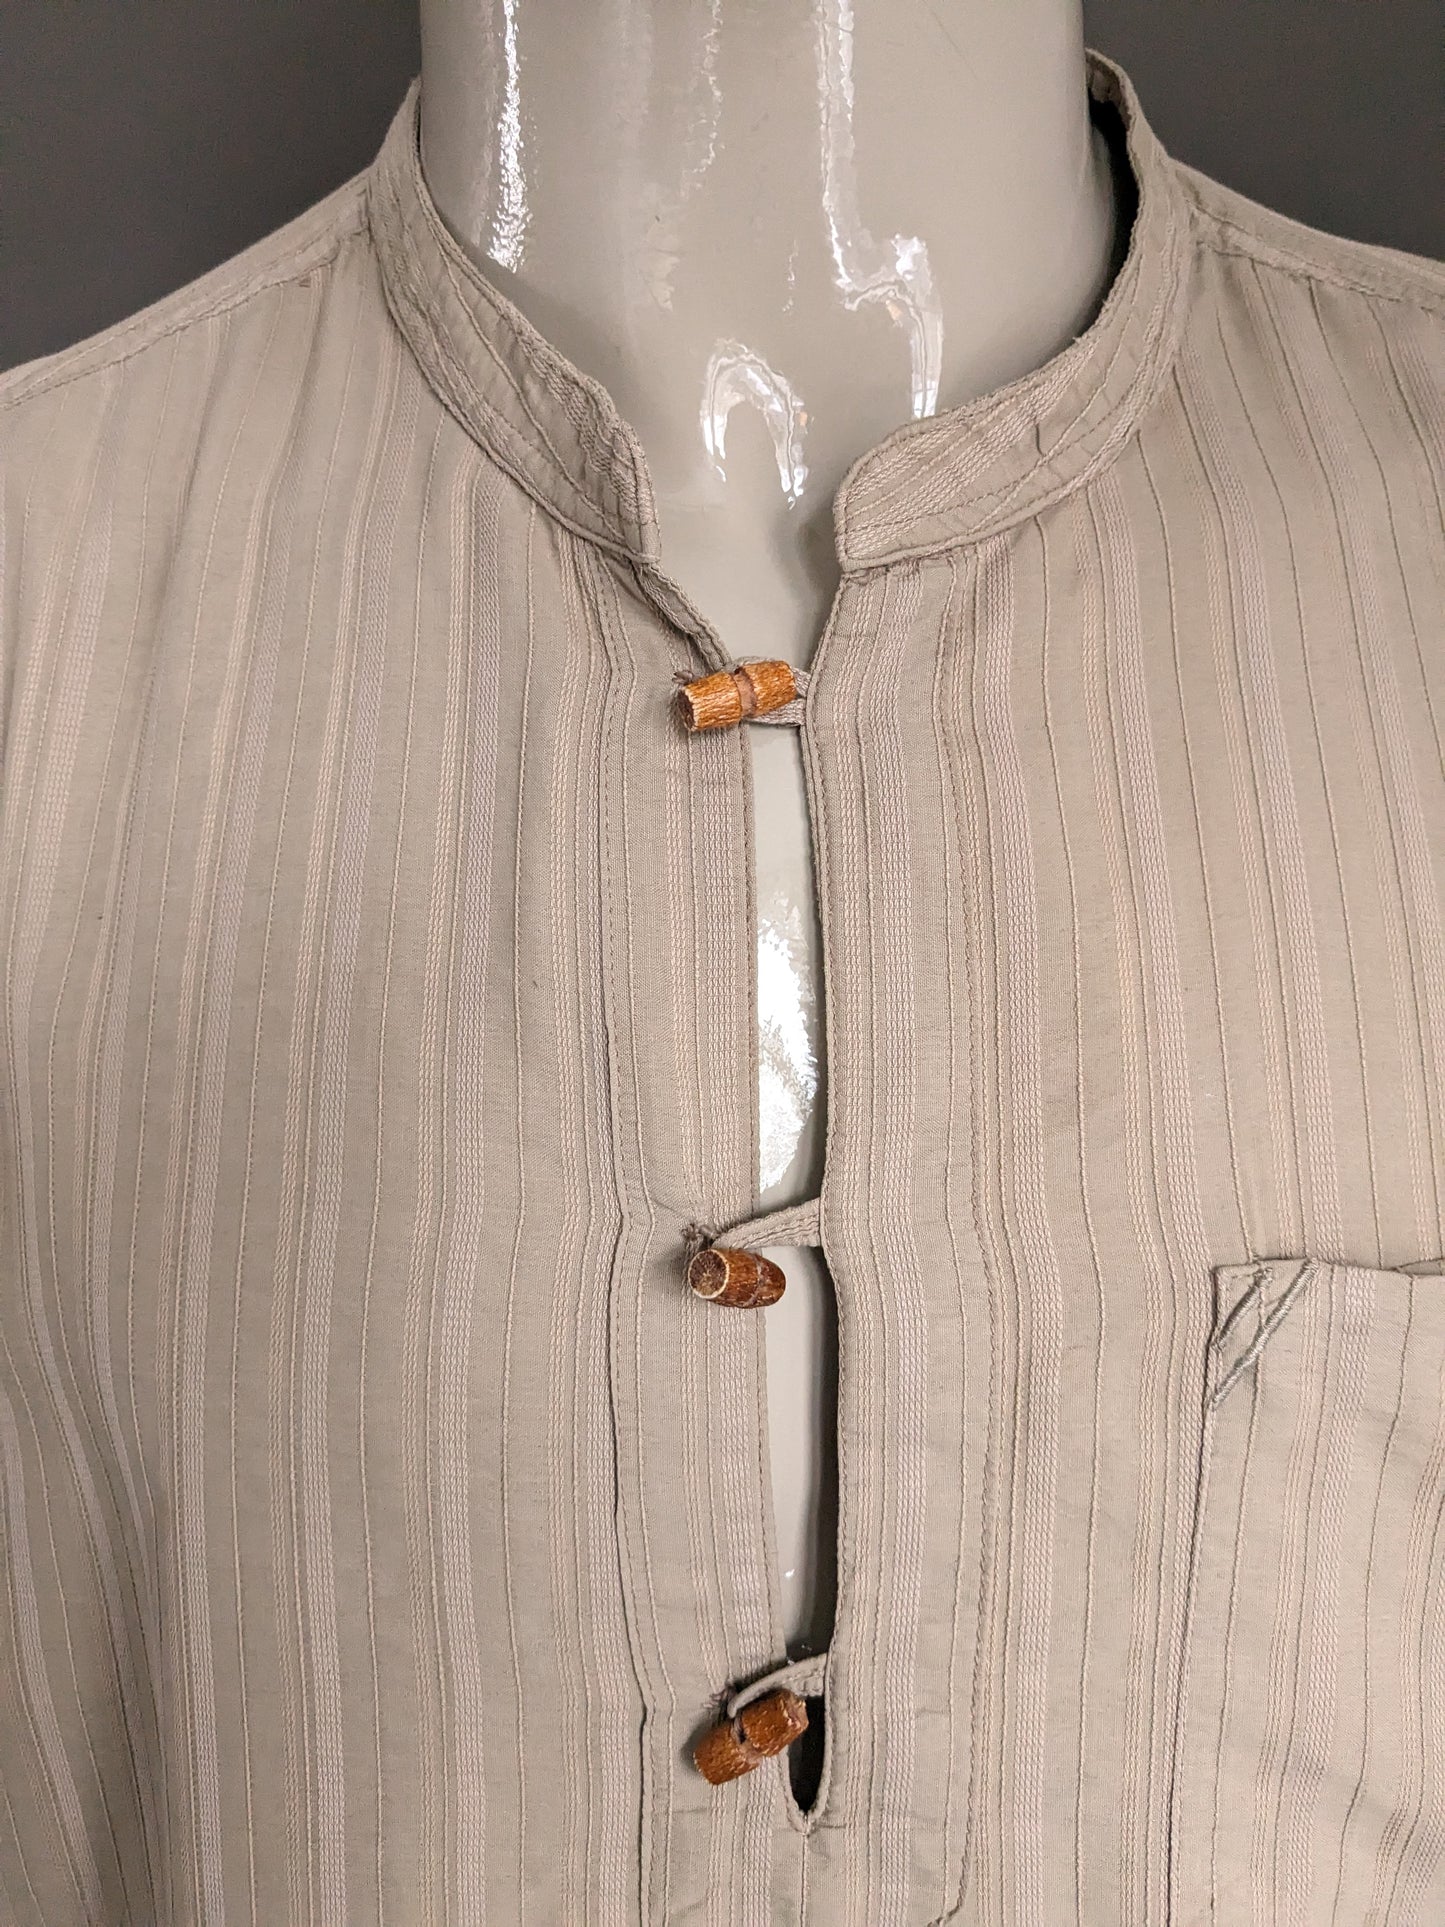 G-Club shirt / polo Mao / opstaande kraag met houten knoopjes. Lichtbruin motief. Maat XXL / 2XL.